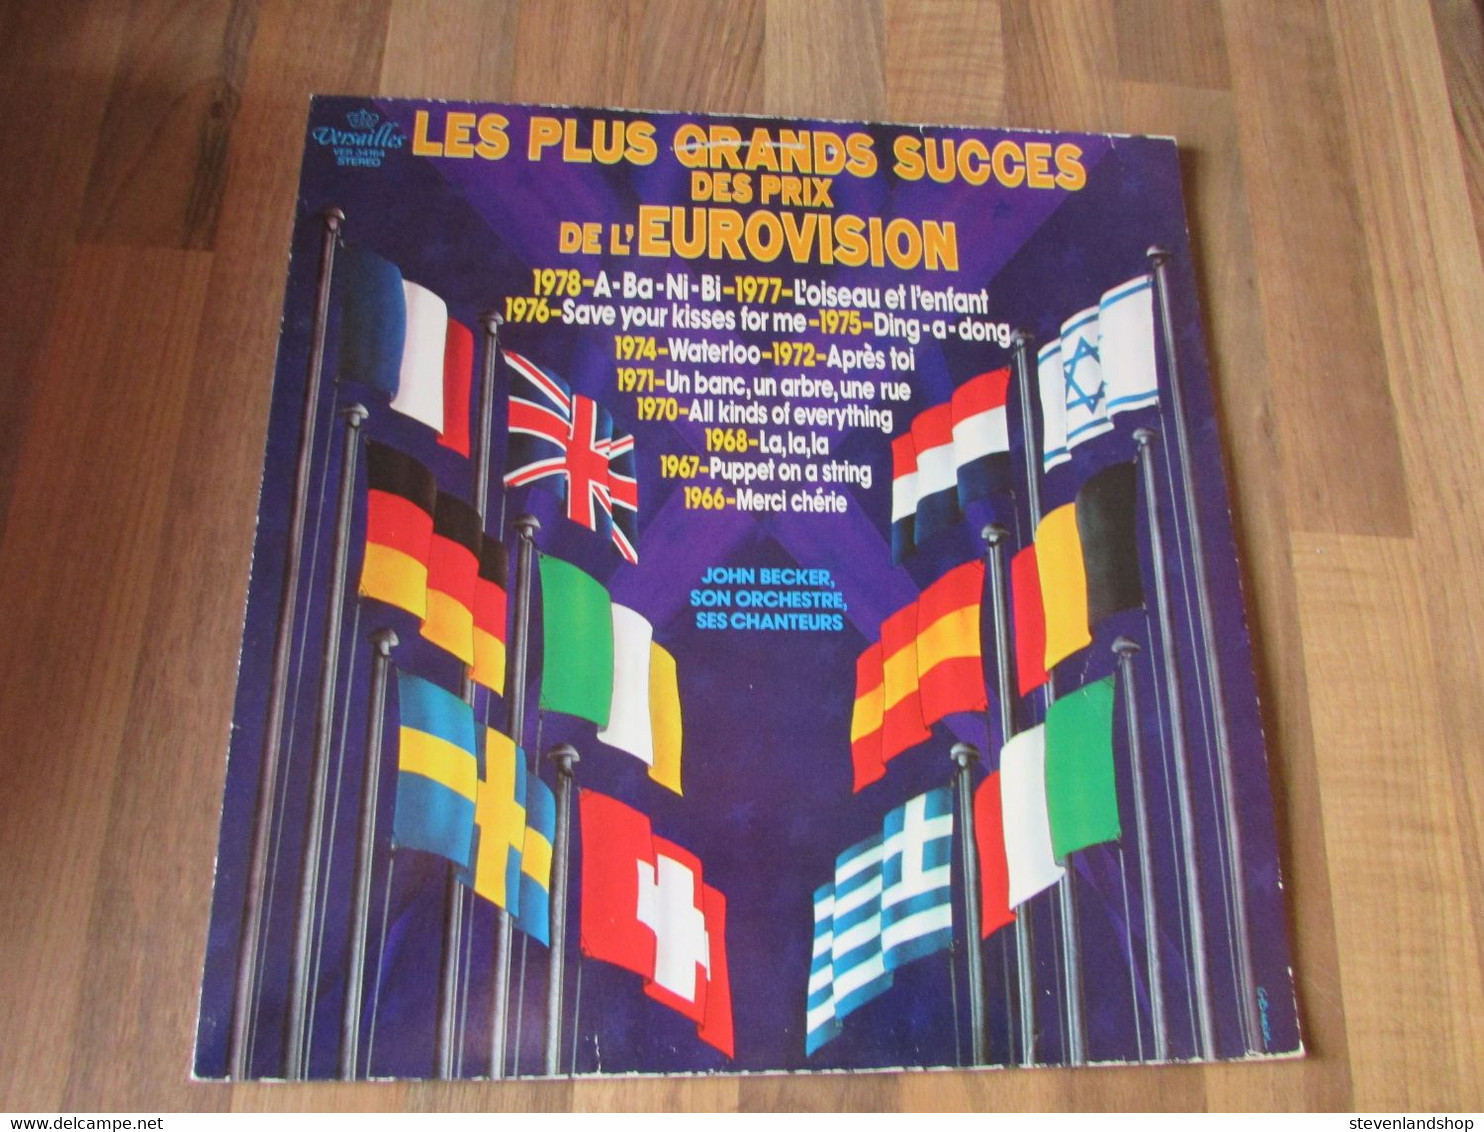 Les Plus Grands Succes Des Prix De L'Eurovision - Ediciones De Colección